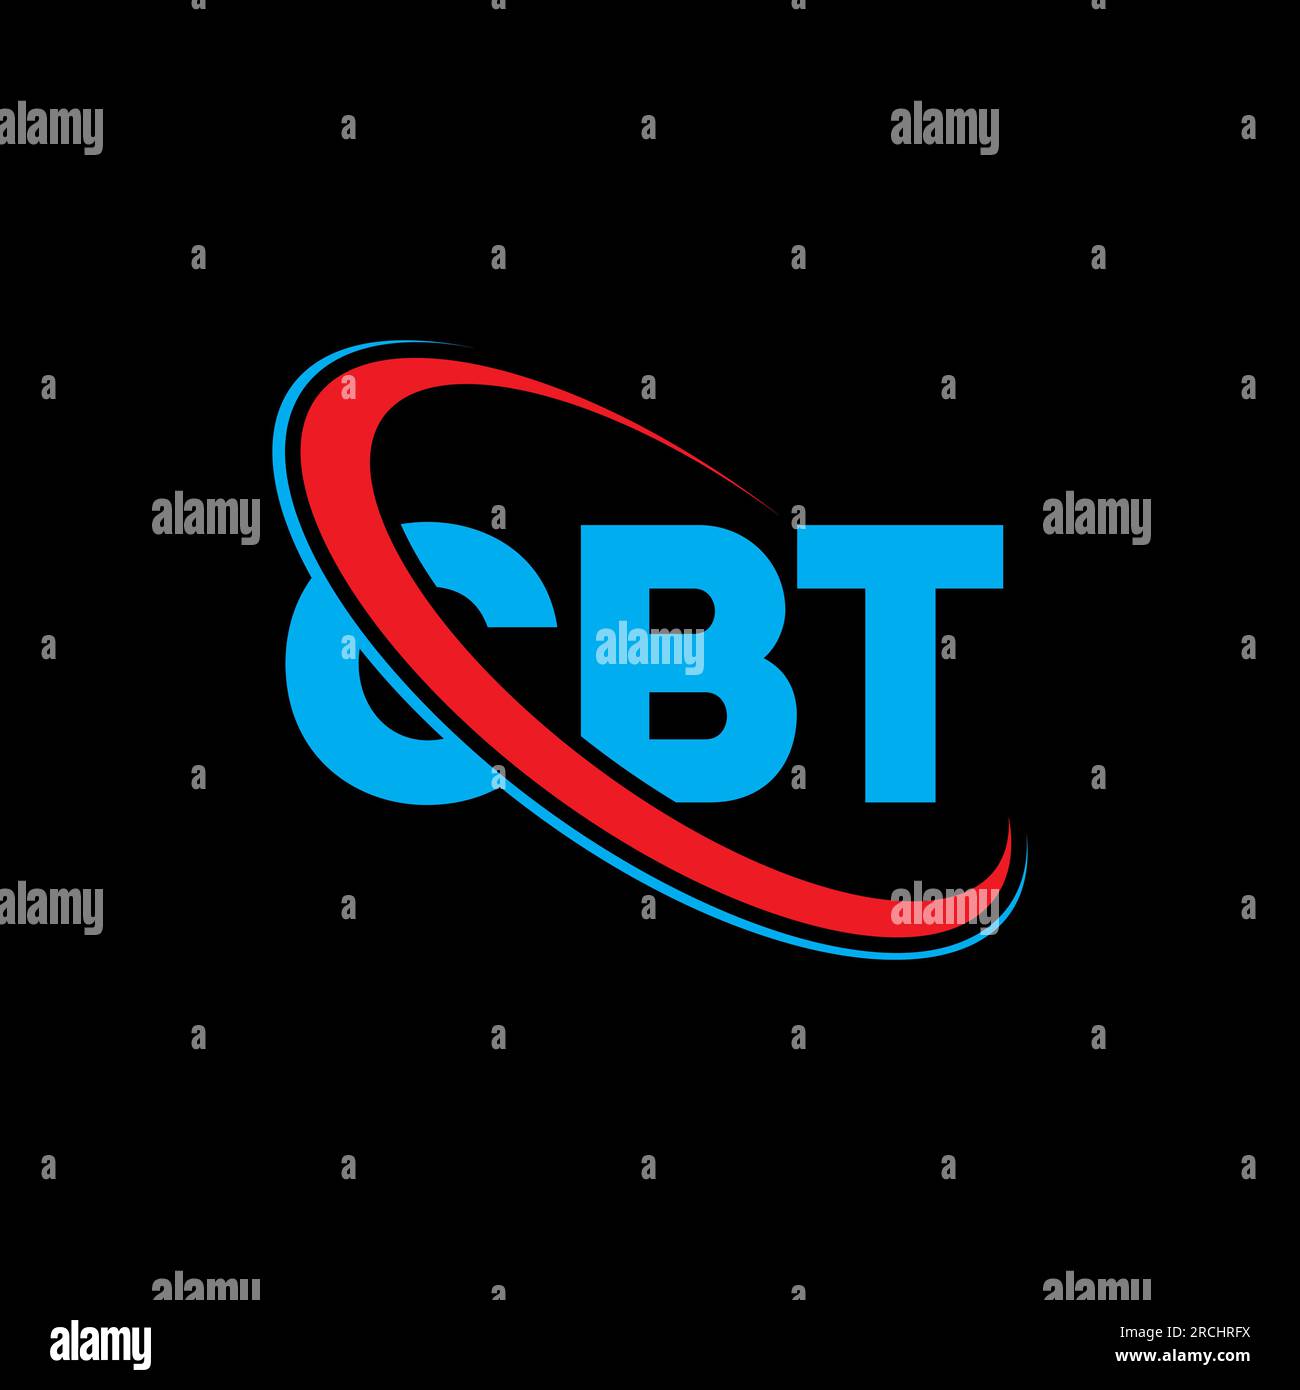 CBT logo. CBT letter. CBT letter logo design. Initials CBT logo linked with circle and uppercase monogram logo. CBT typography for technology, busines Stock Vector